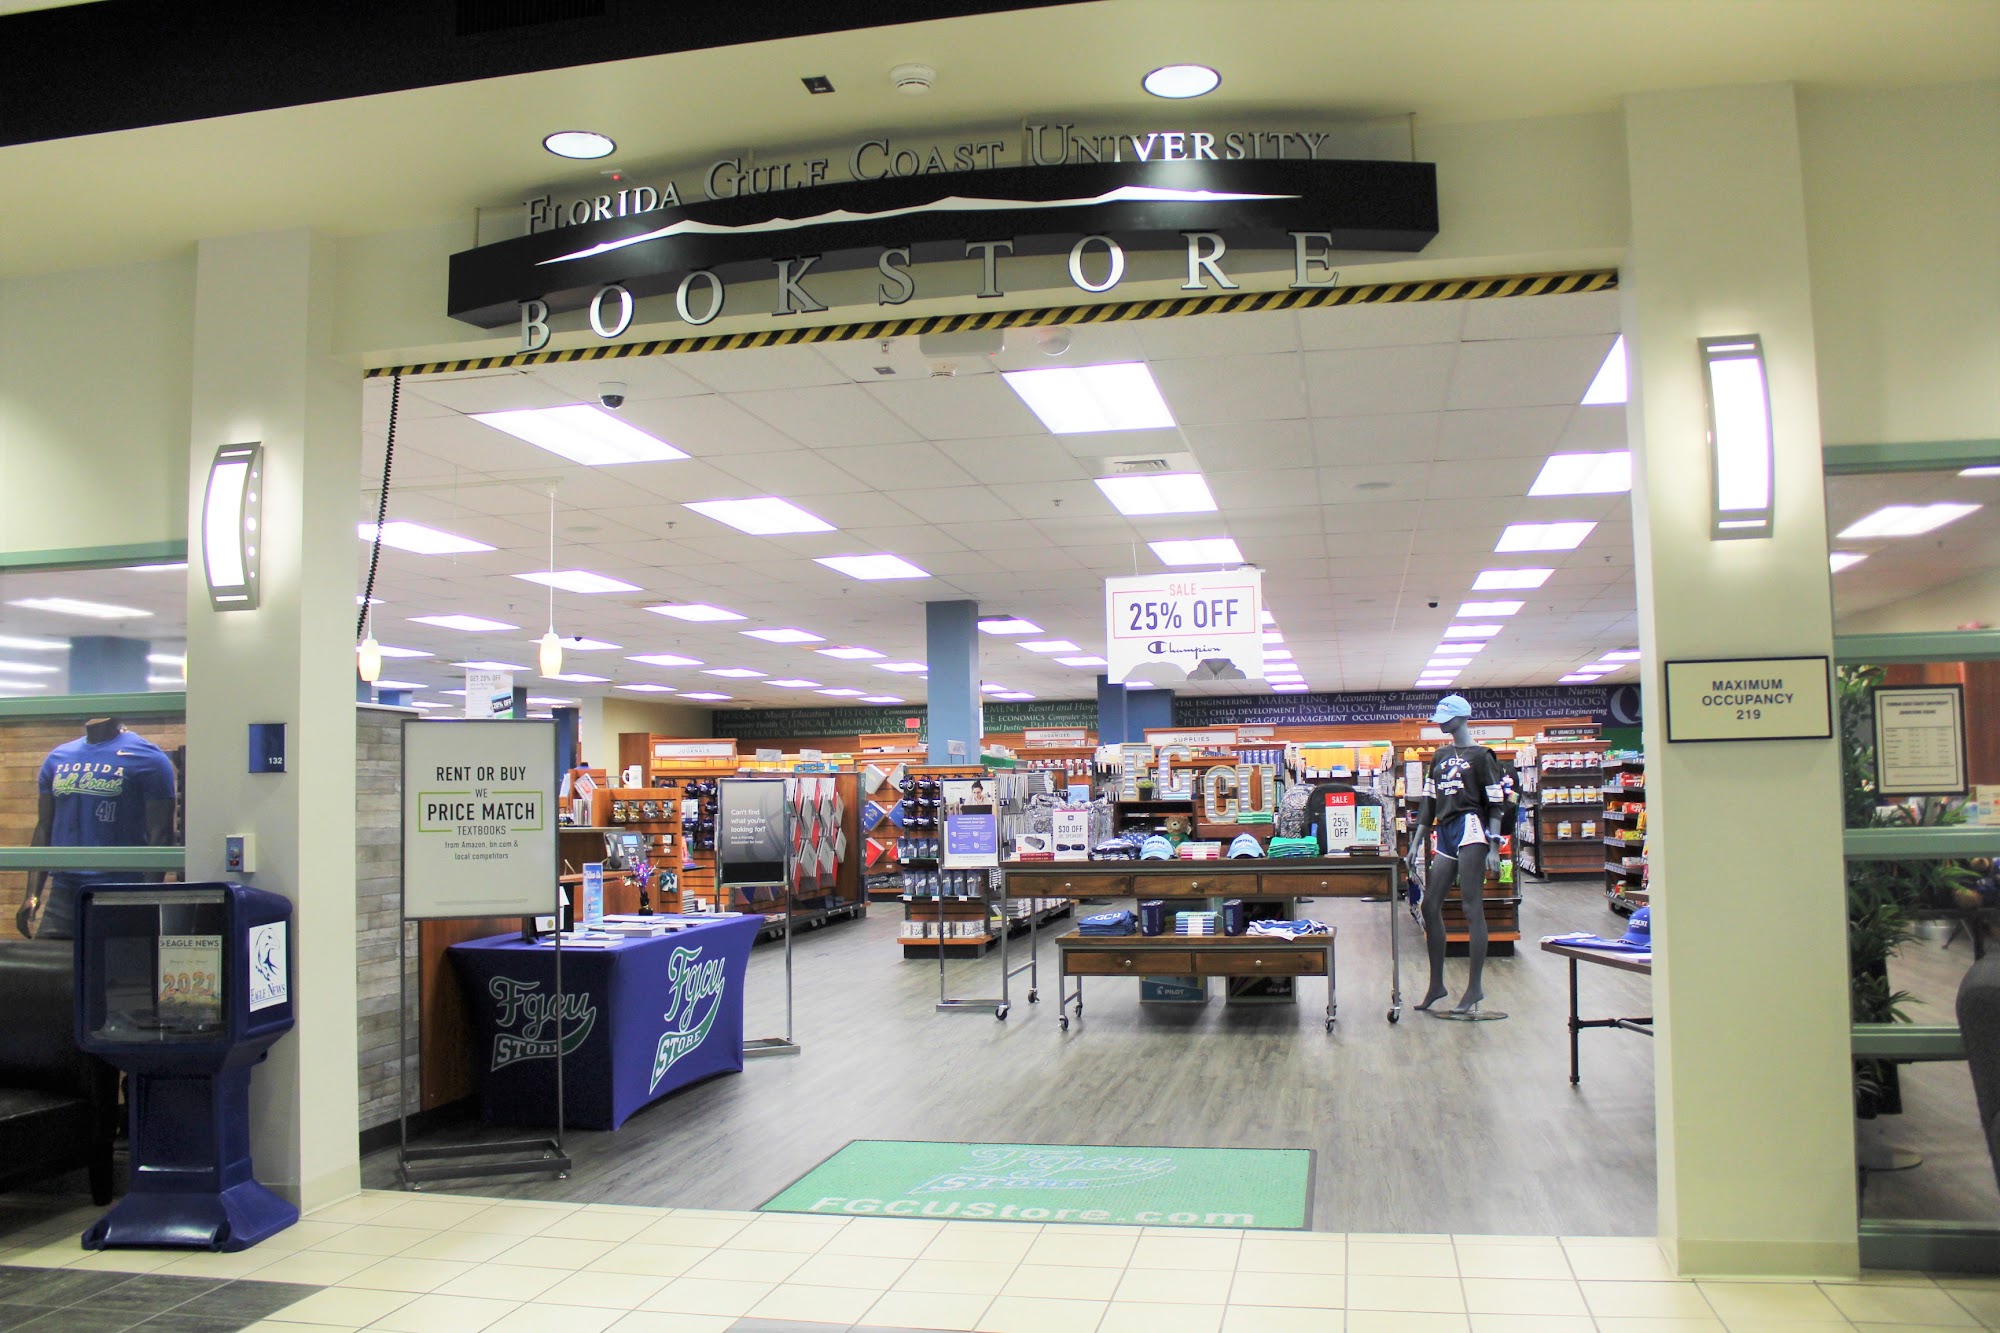 Barnes & Noble at Florida Gulf Coast University